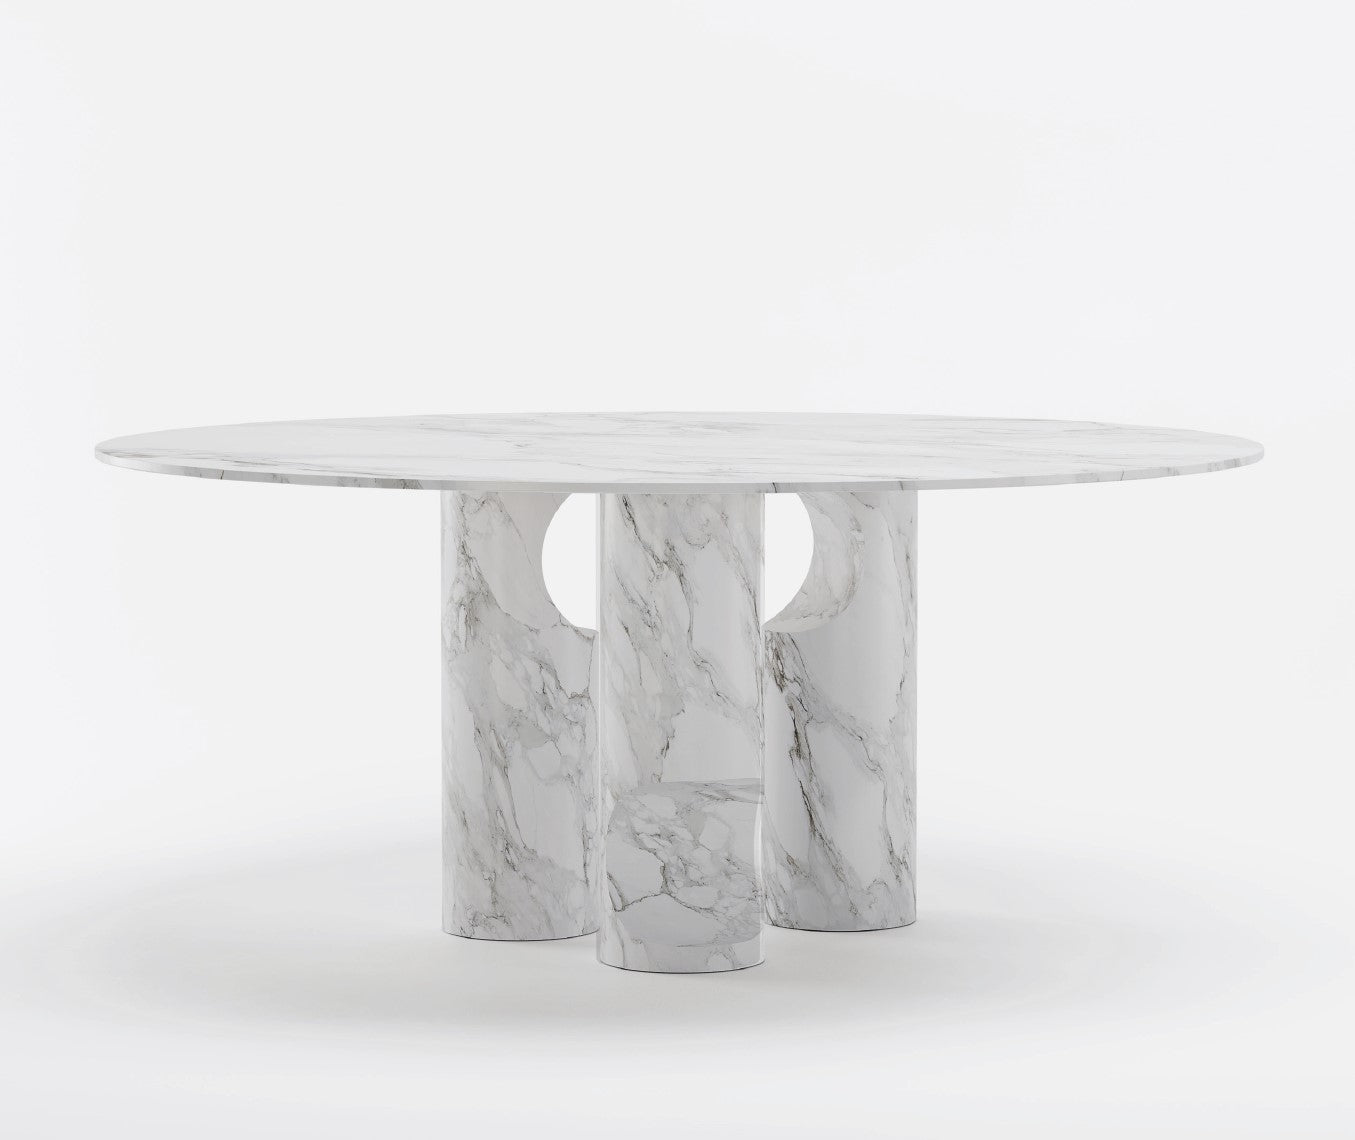 FLUCTO I Dining table by Emanuele Santalena